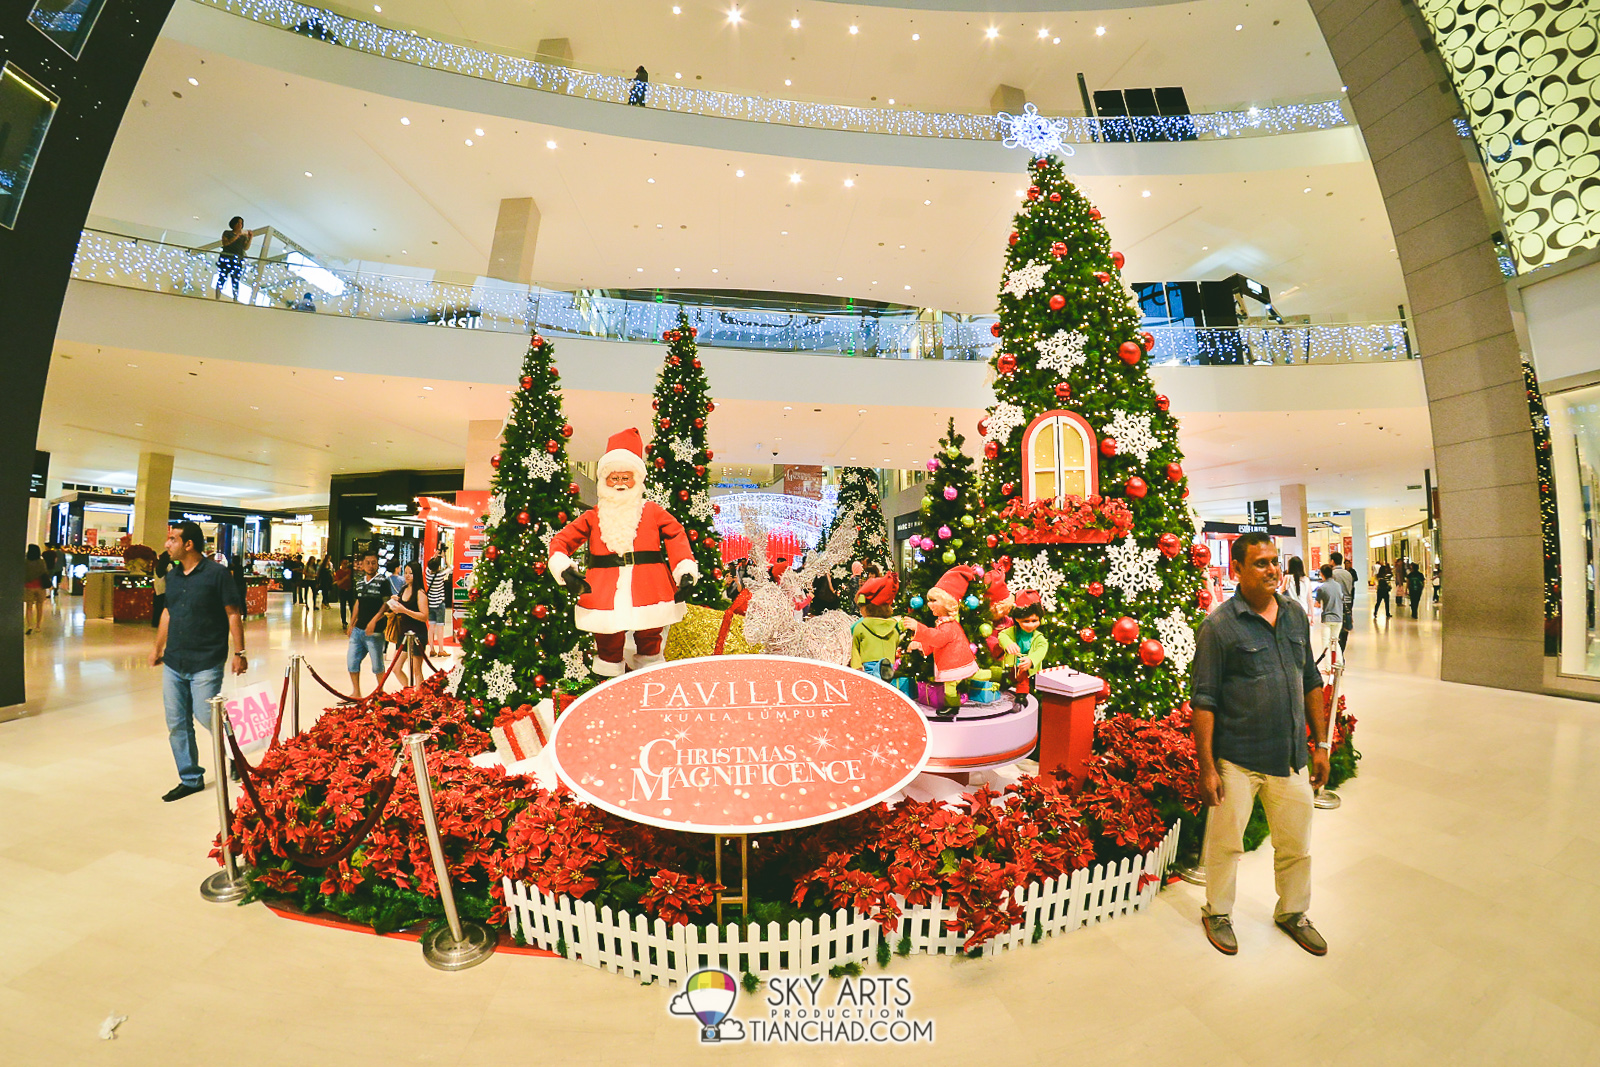 Pavilion Kuala Lumpur 2014 Christmas Magnificence